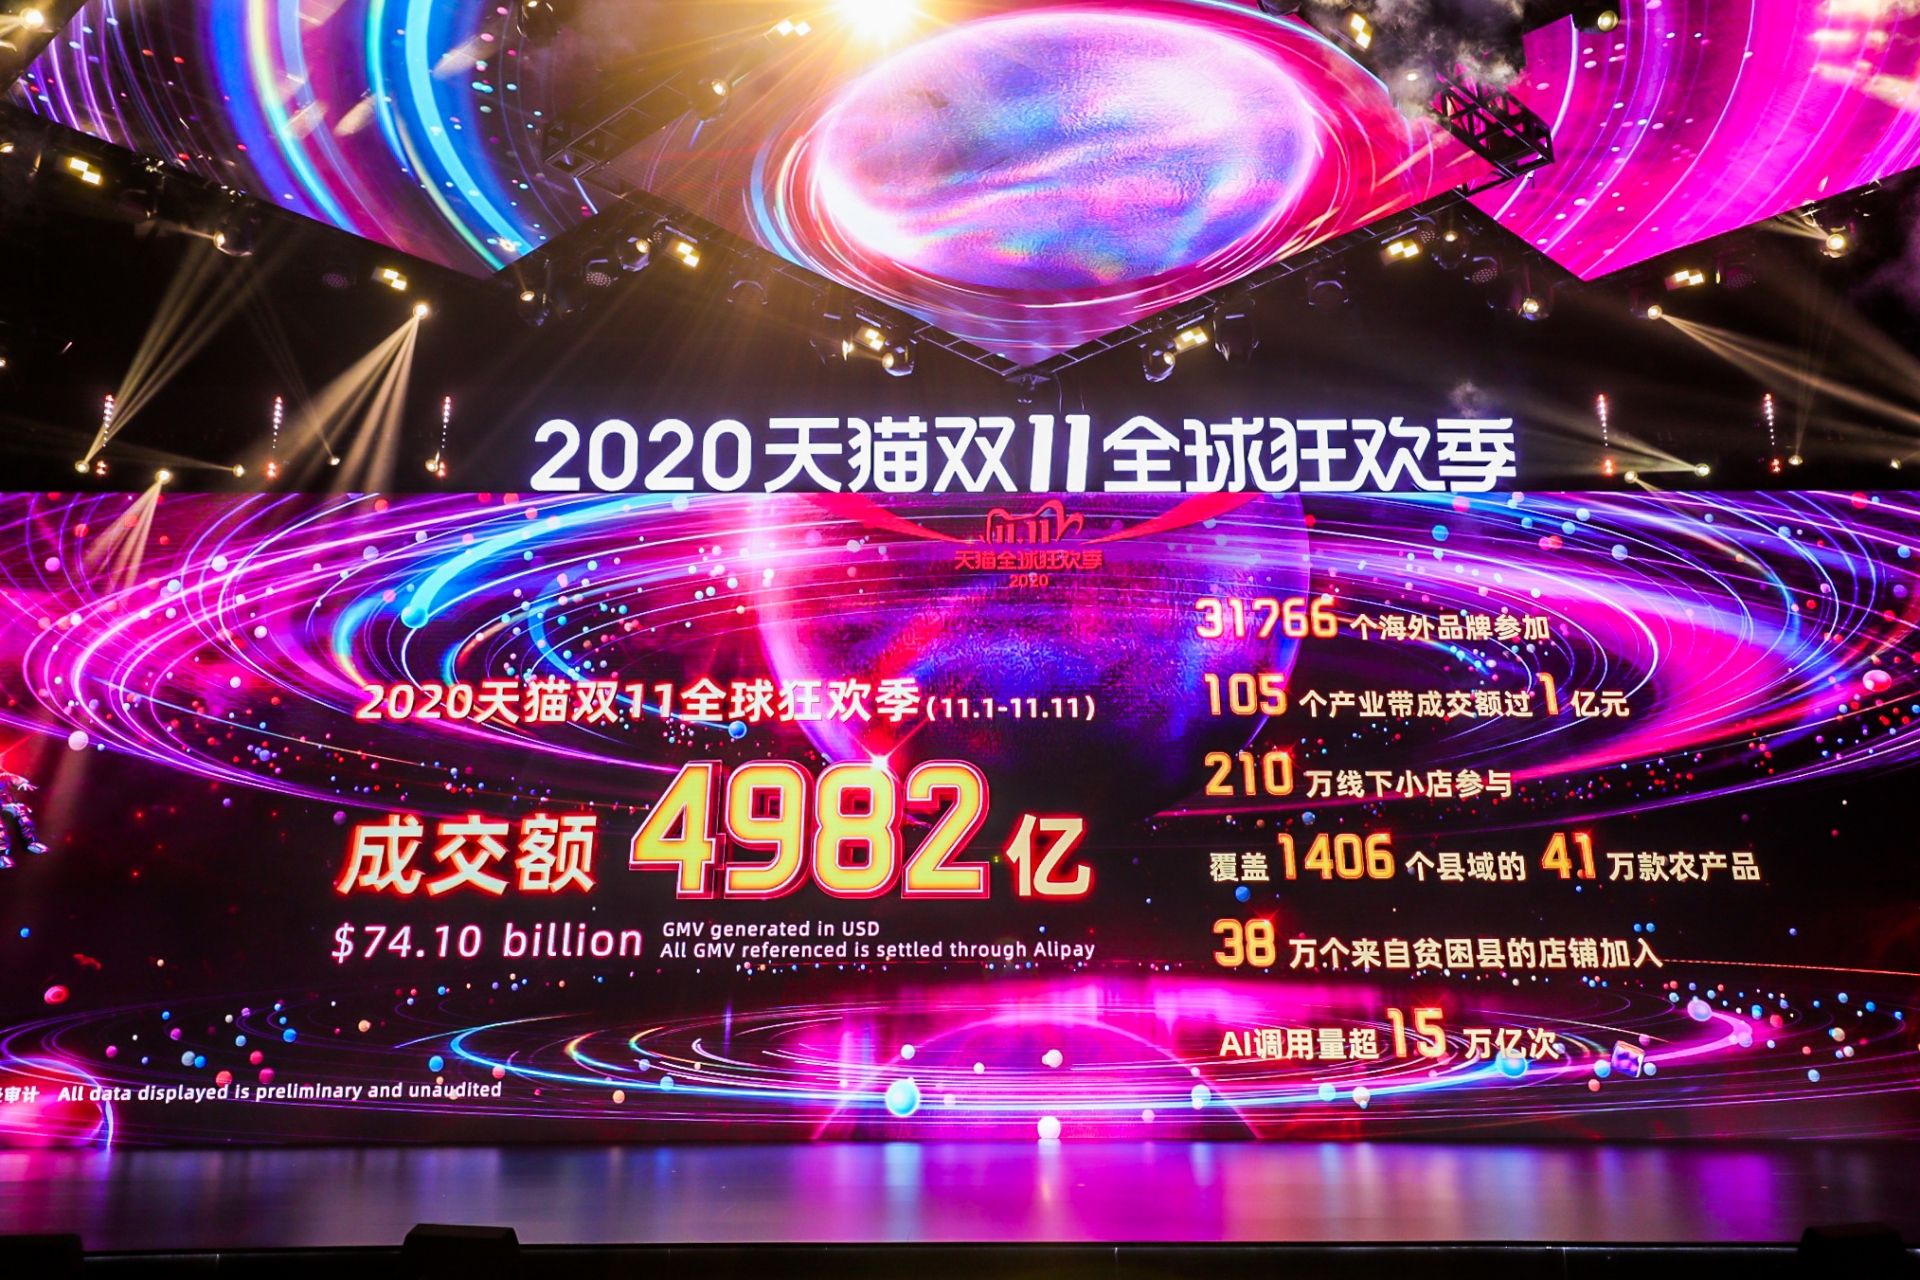 Alibaba generates $74.1 billion in GMV during 2020 11.11 Global Shopping Festival